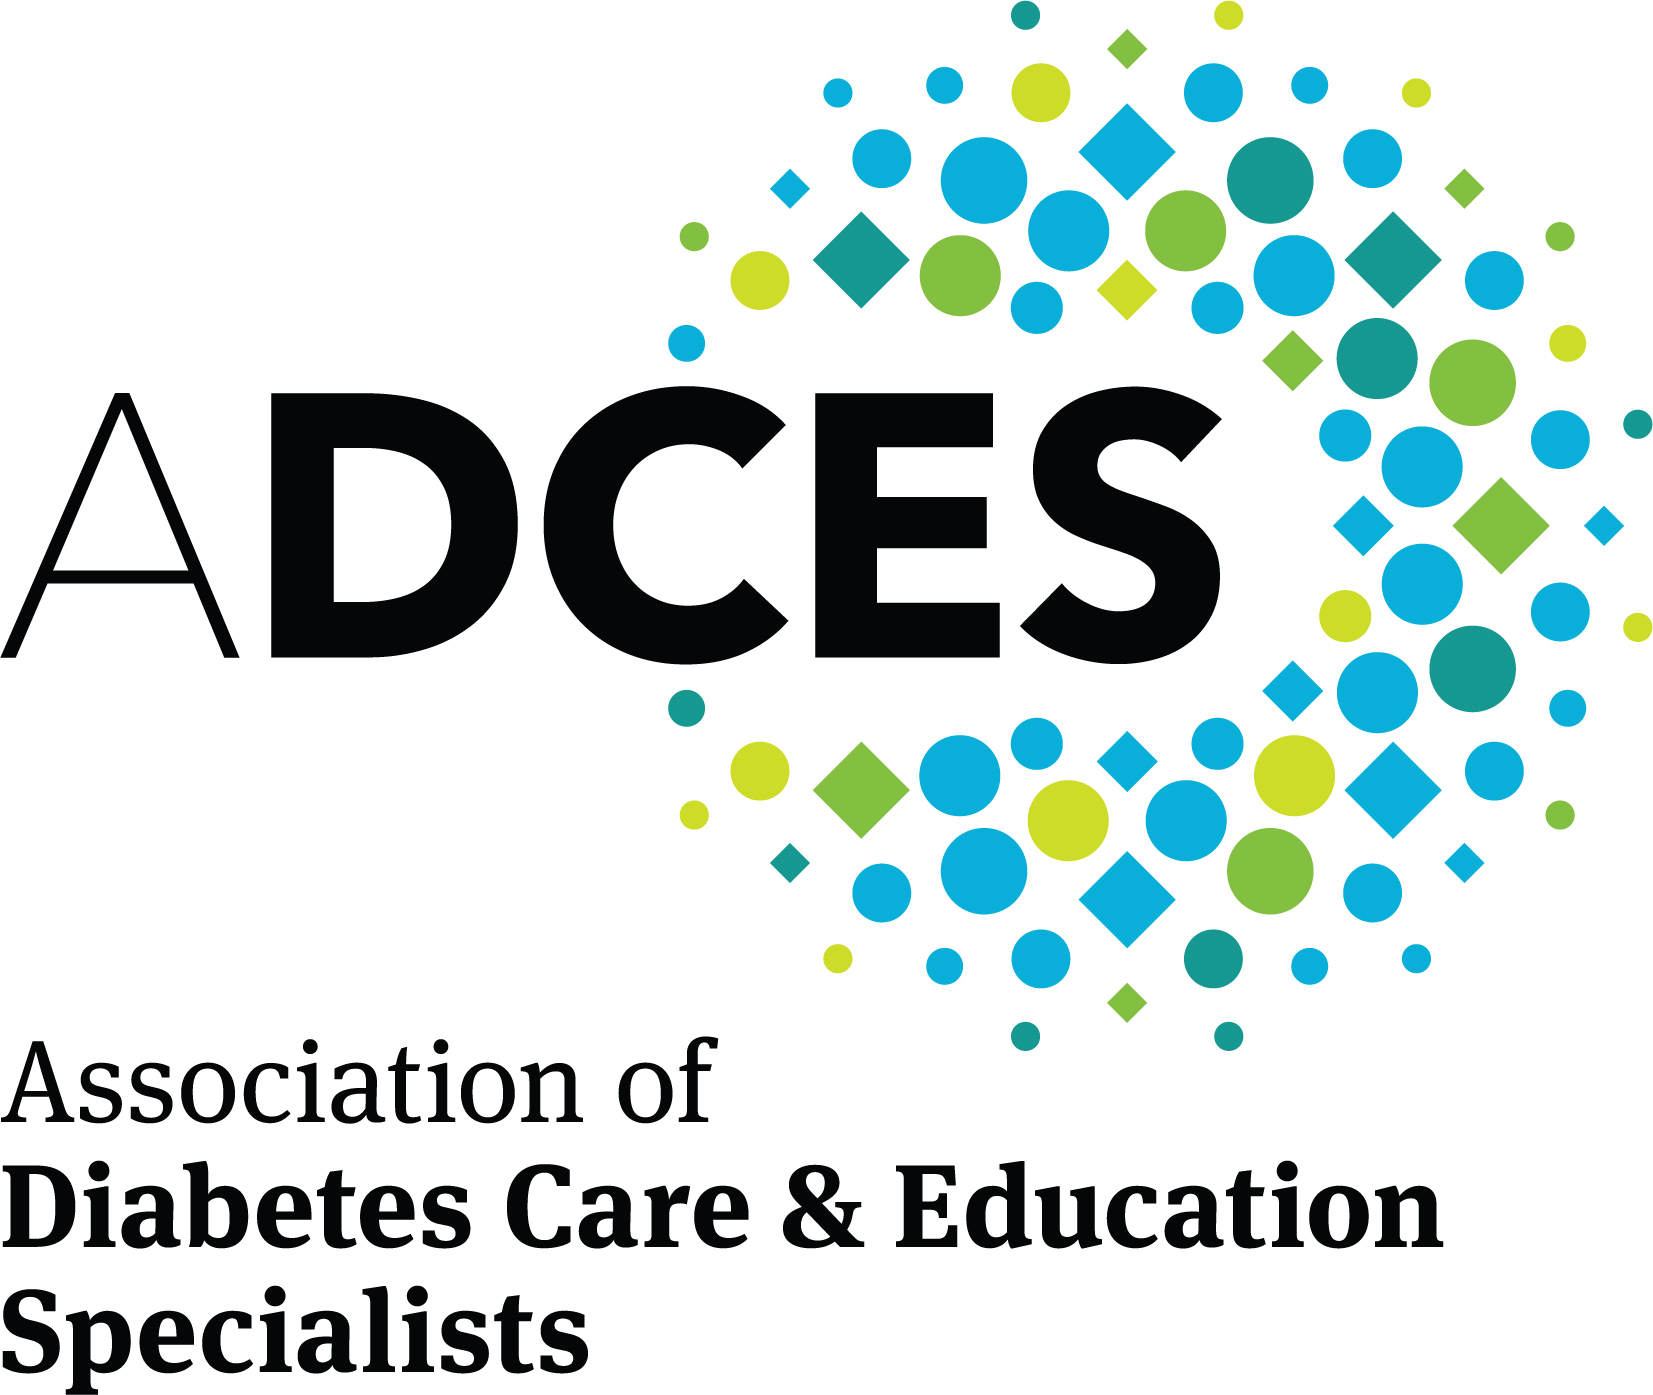 Association of Diabetes Care & Education Specialists (ADCES)